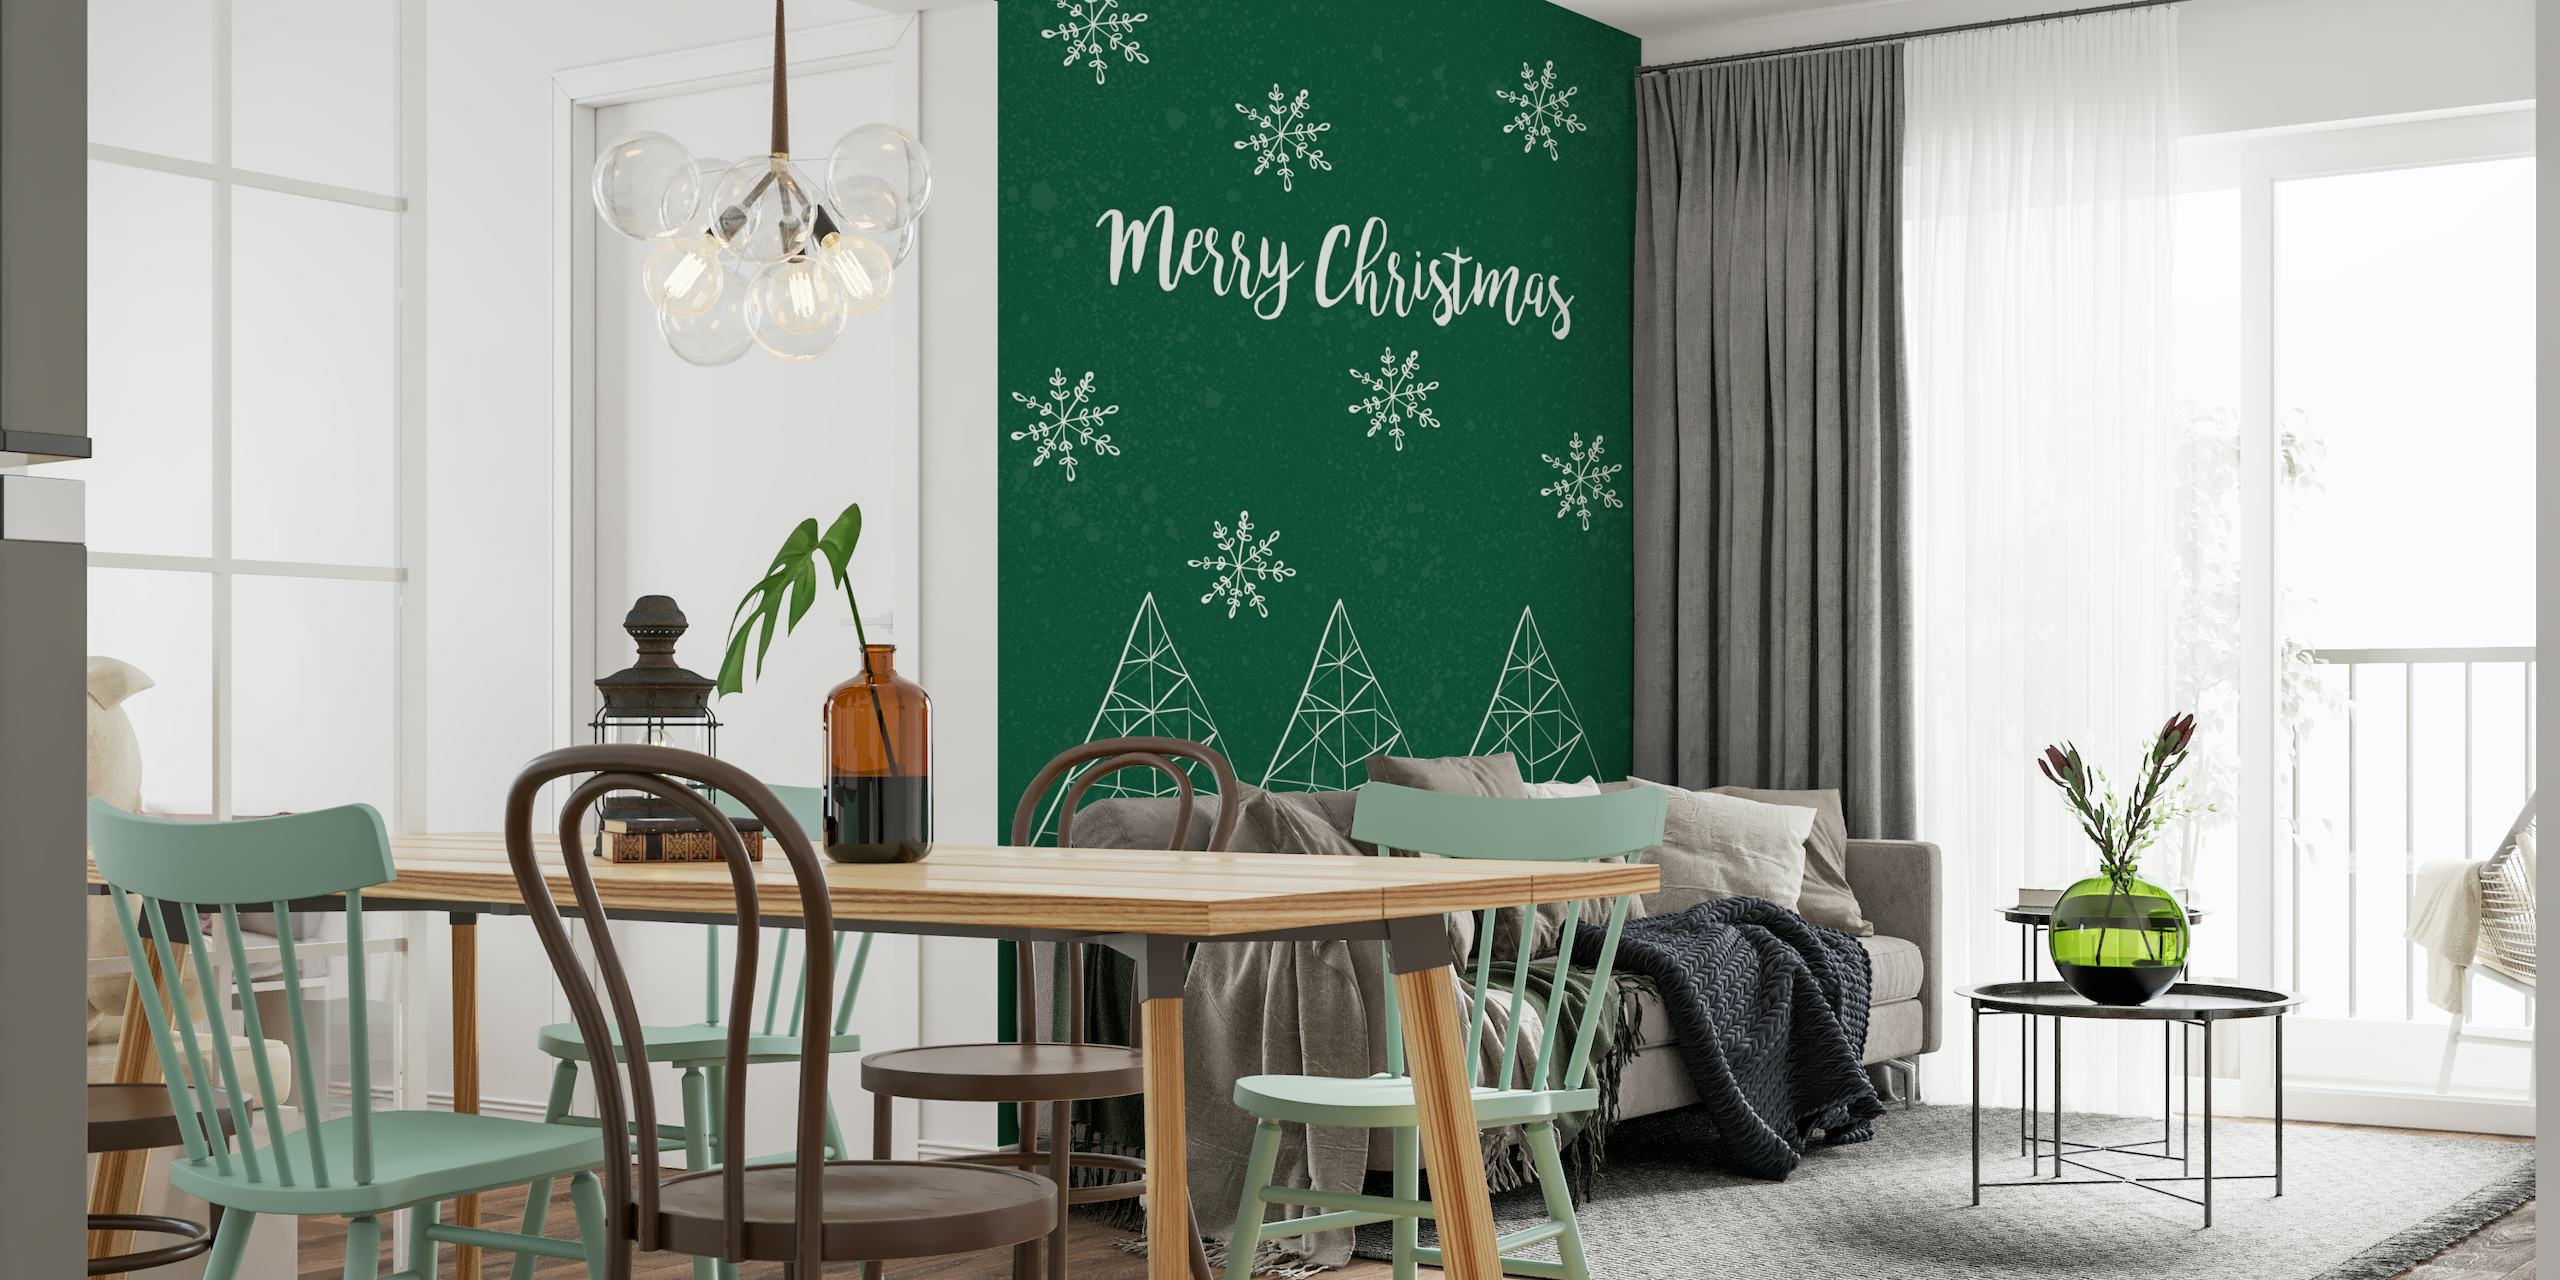 Merry Christmas Green papiers peint